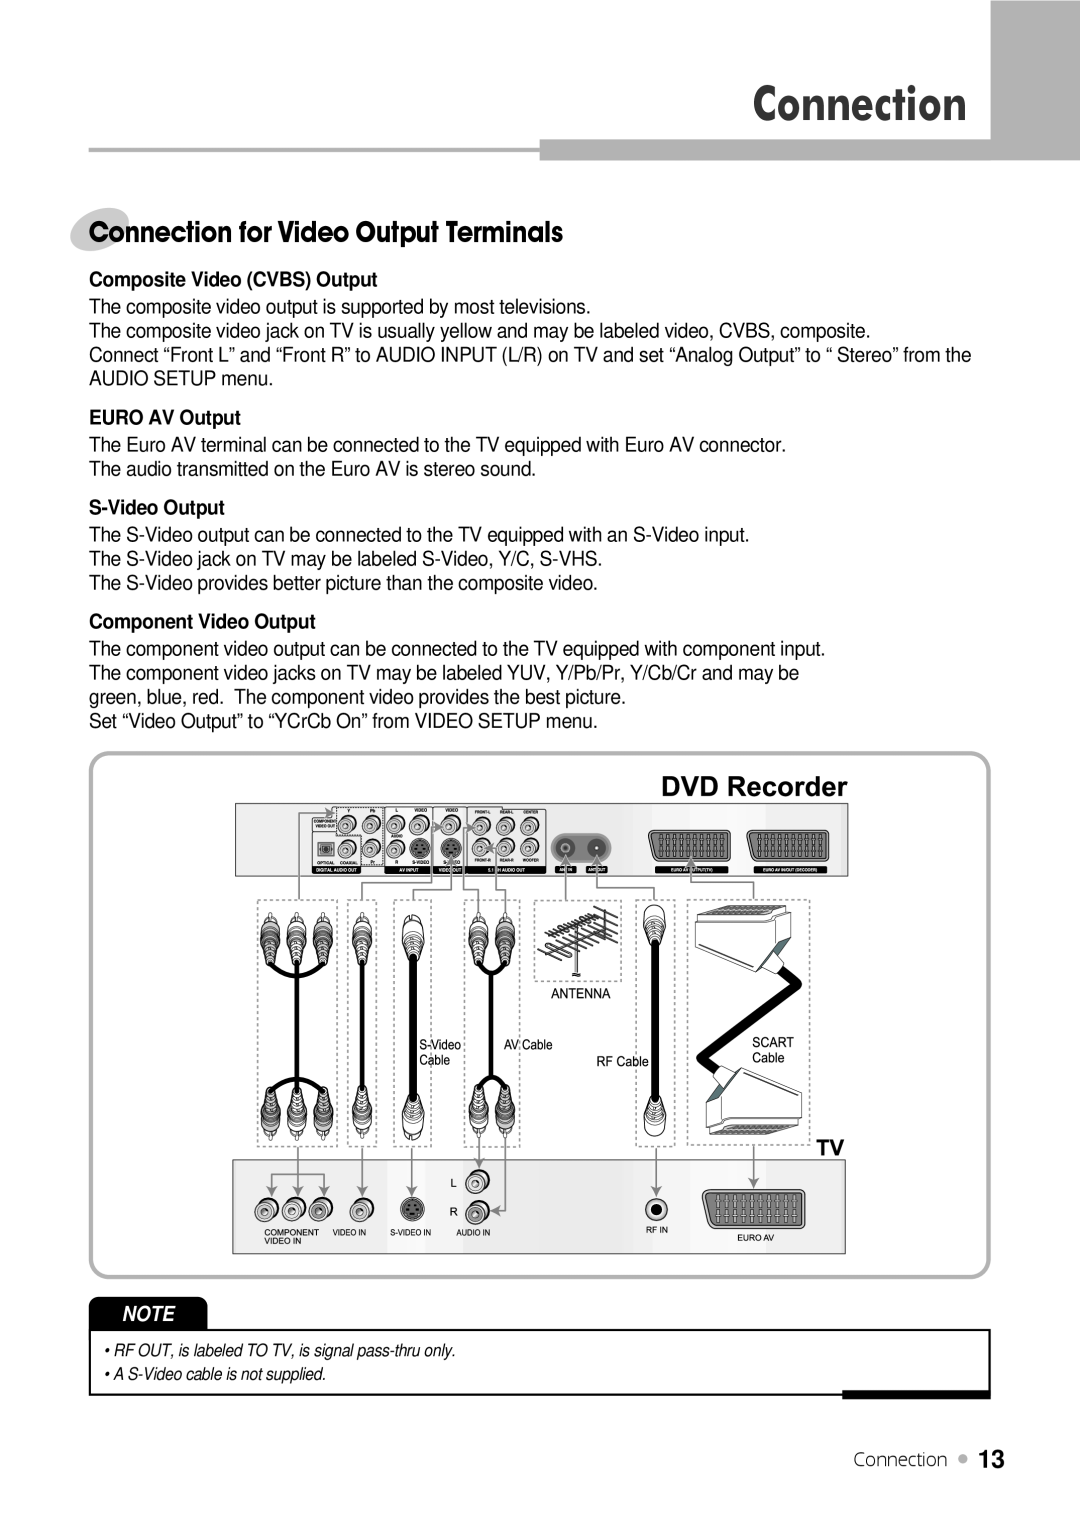 Kodak DRHD-120 Connection for Video Output Terminals, Composite Video CVBS Output, EURO AV Output, S-Video Output 